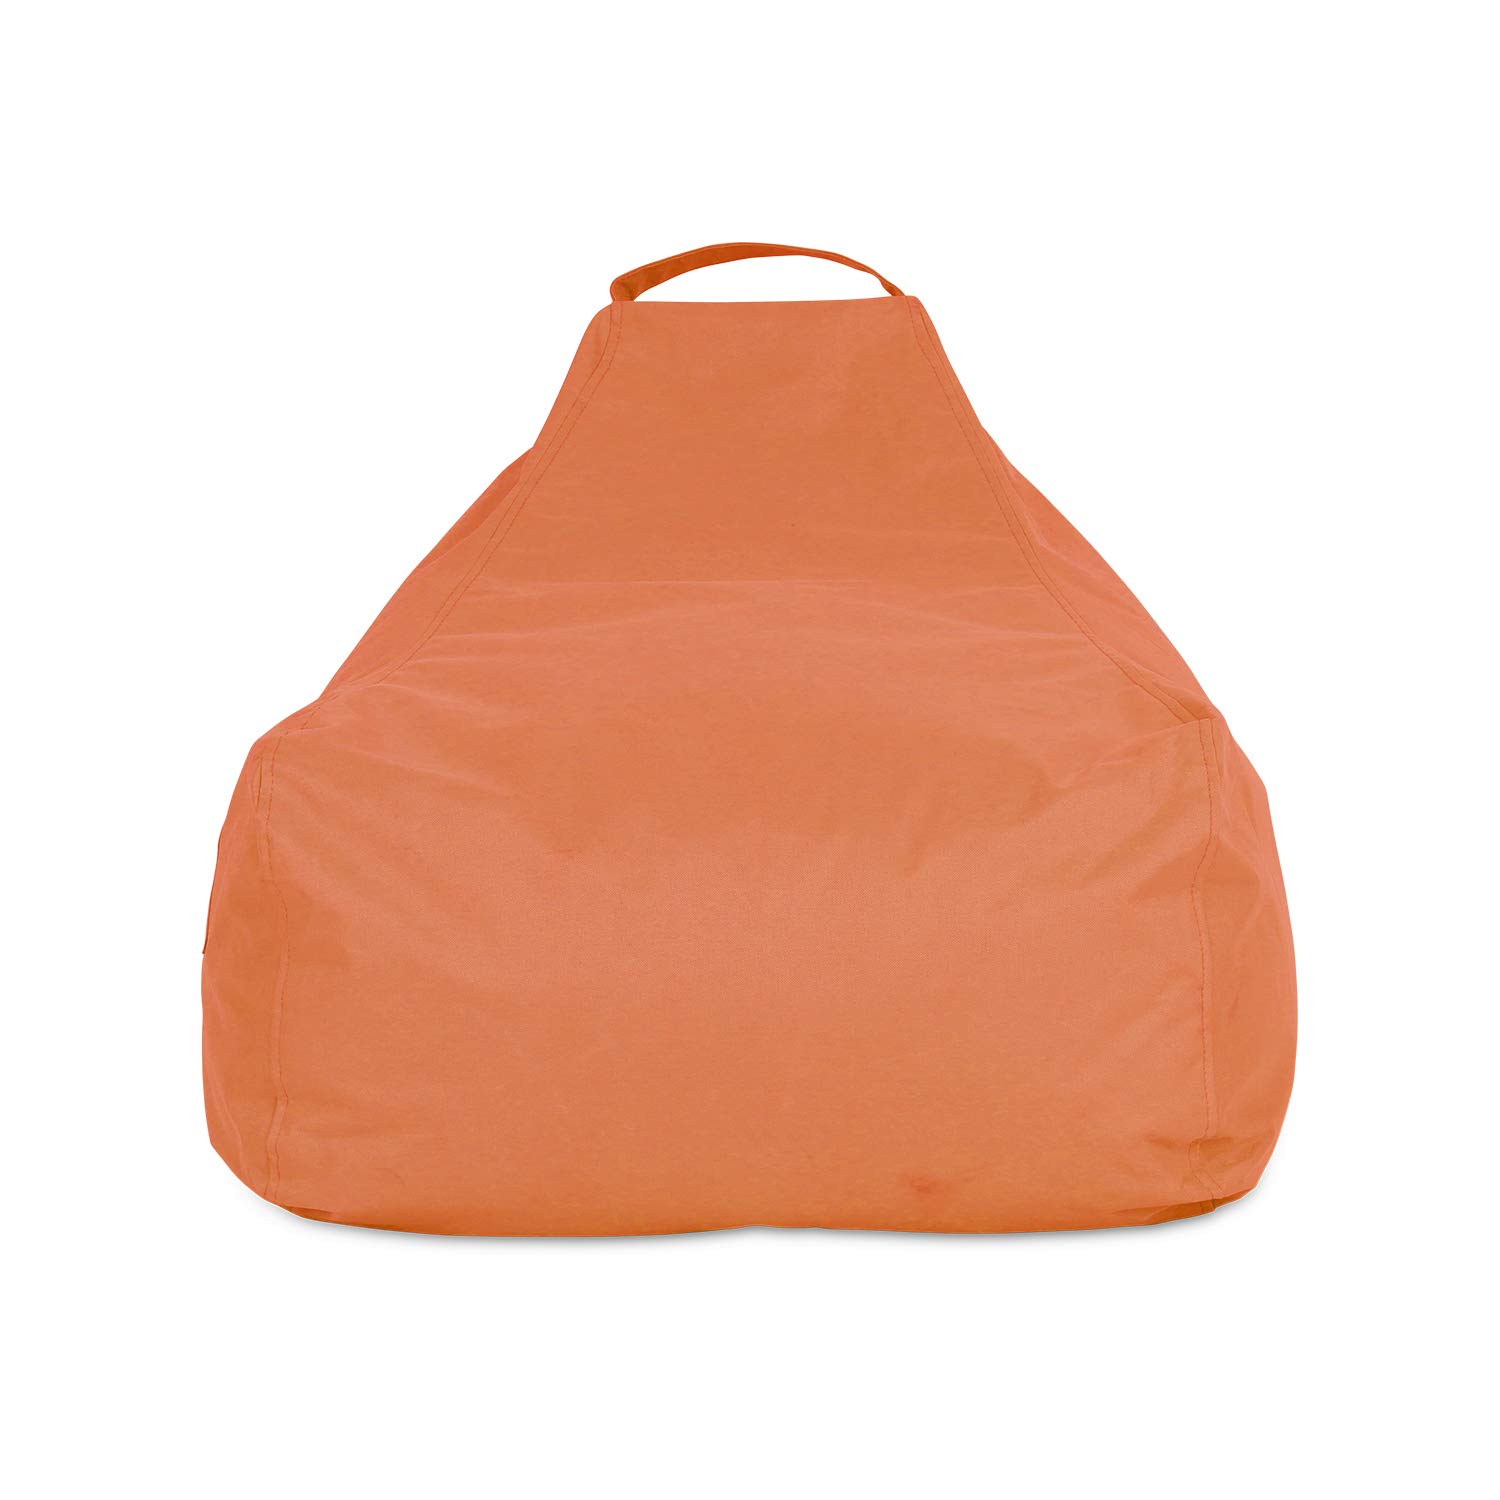 Knorr-Baby 440503 Beanbag Large Colour Orange